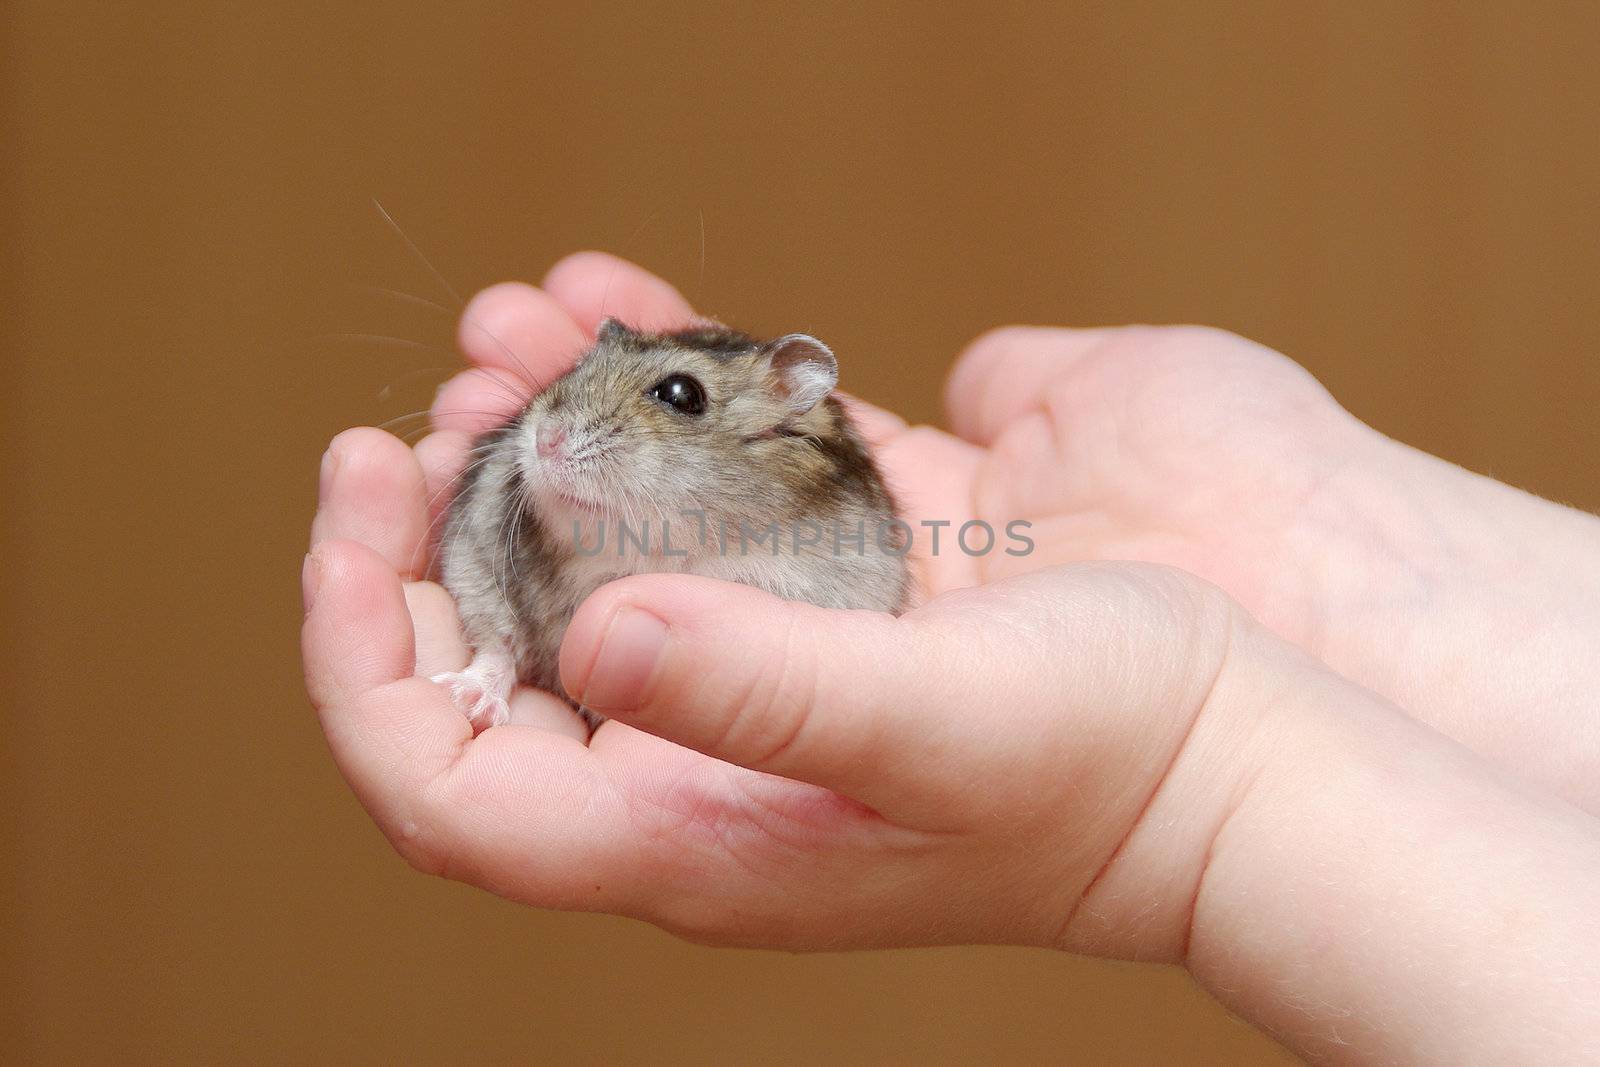 Cute little hamster in child's hands